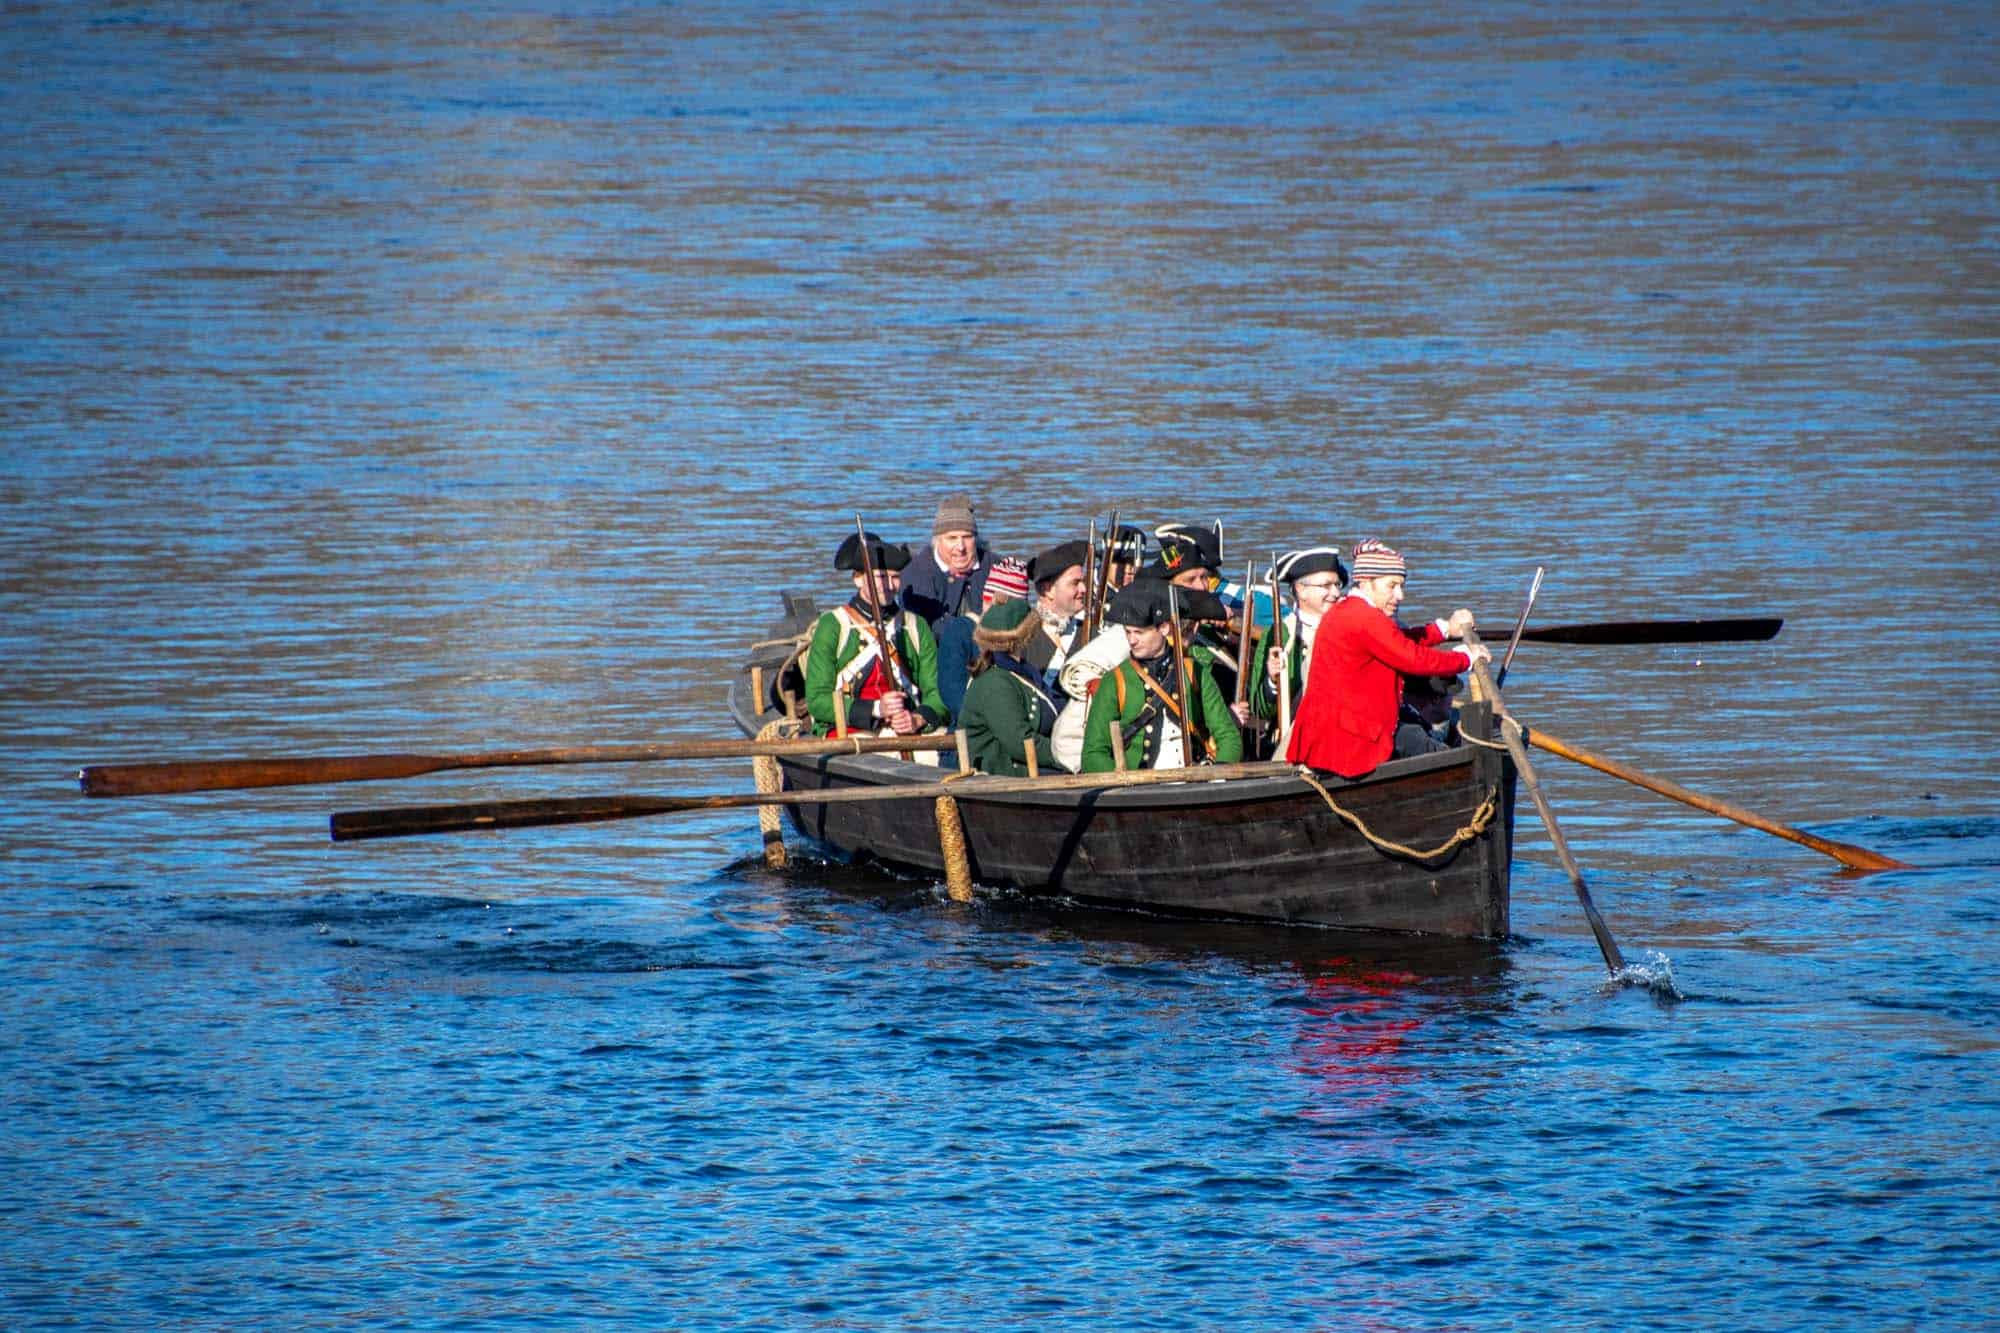 Reenactors in Revolutionary era dress rowing a wooden boat across the Delaware River